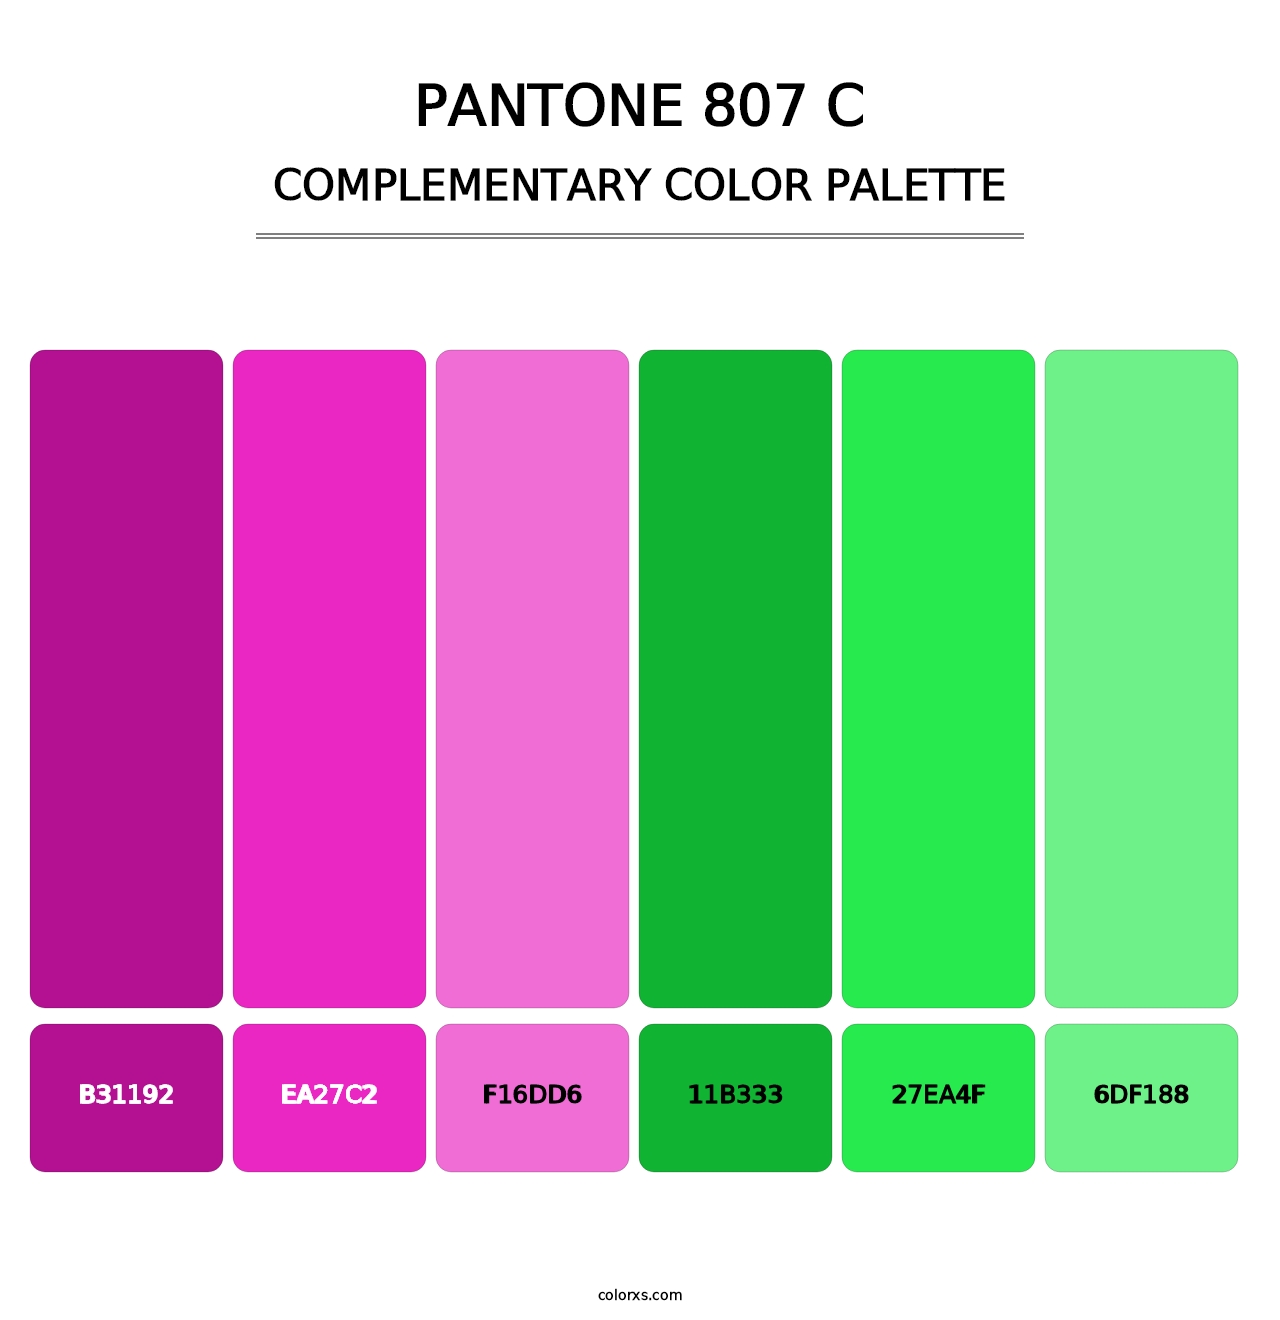 PANTONE 807 C - Complementary Color Palette